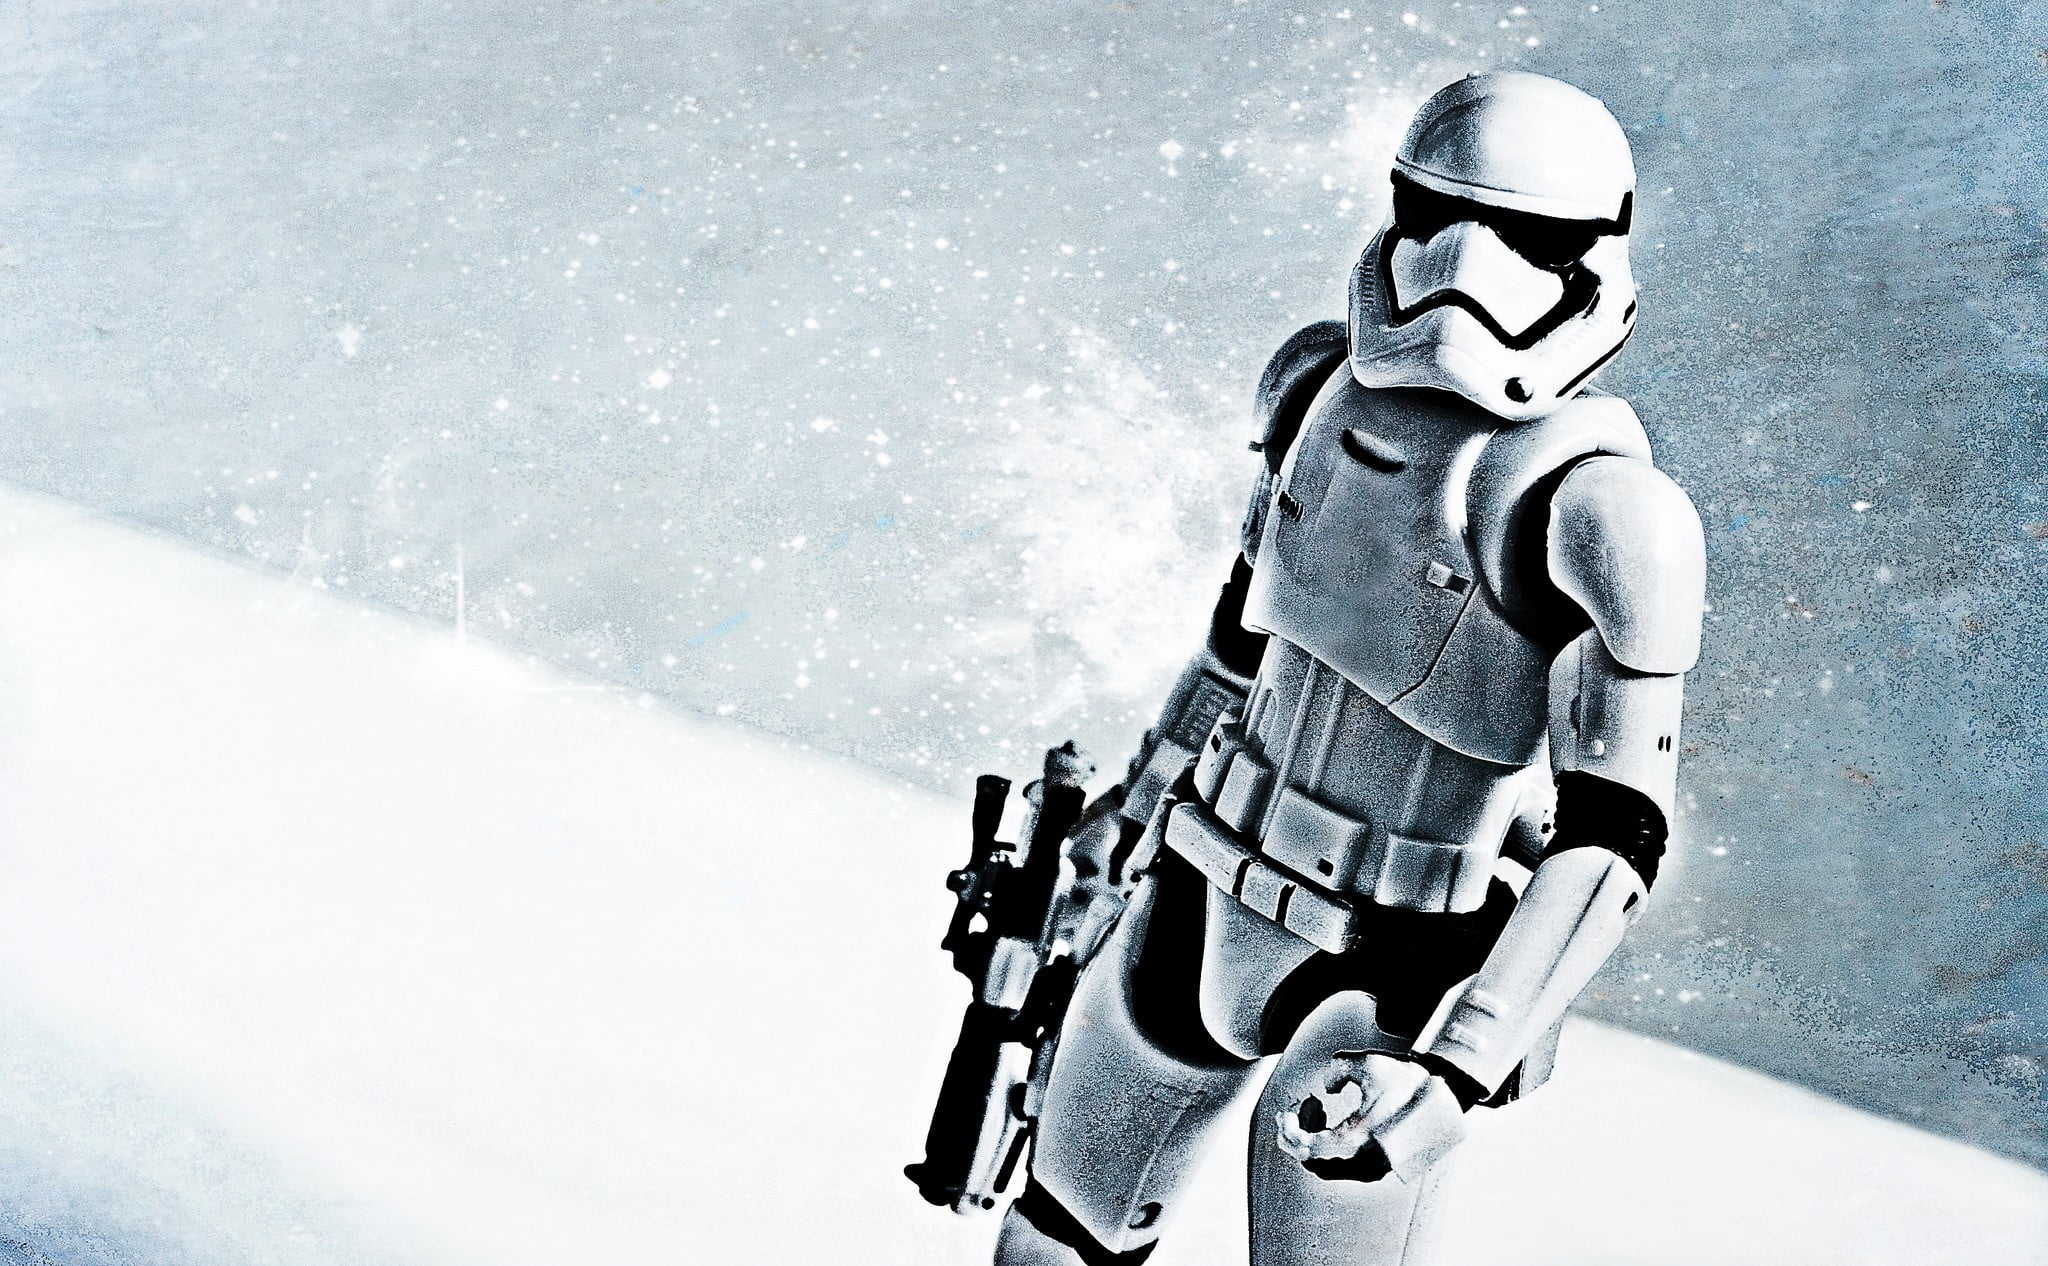 Star Wars Stormtrooper digital wallpaper, Star Wars